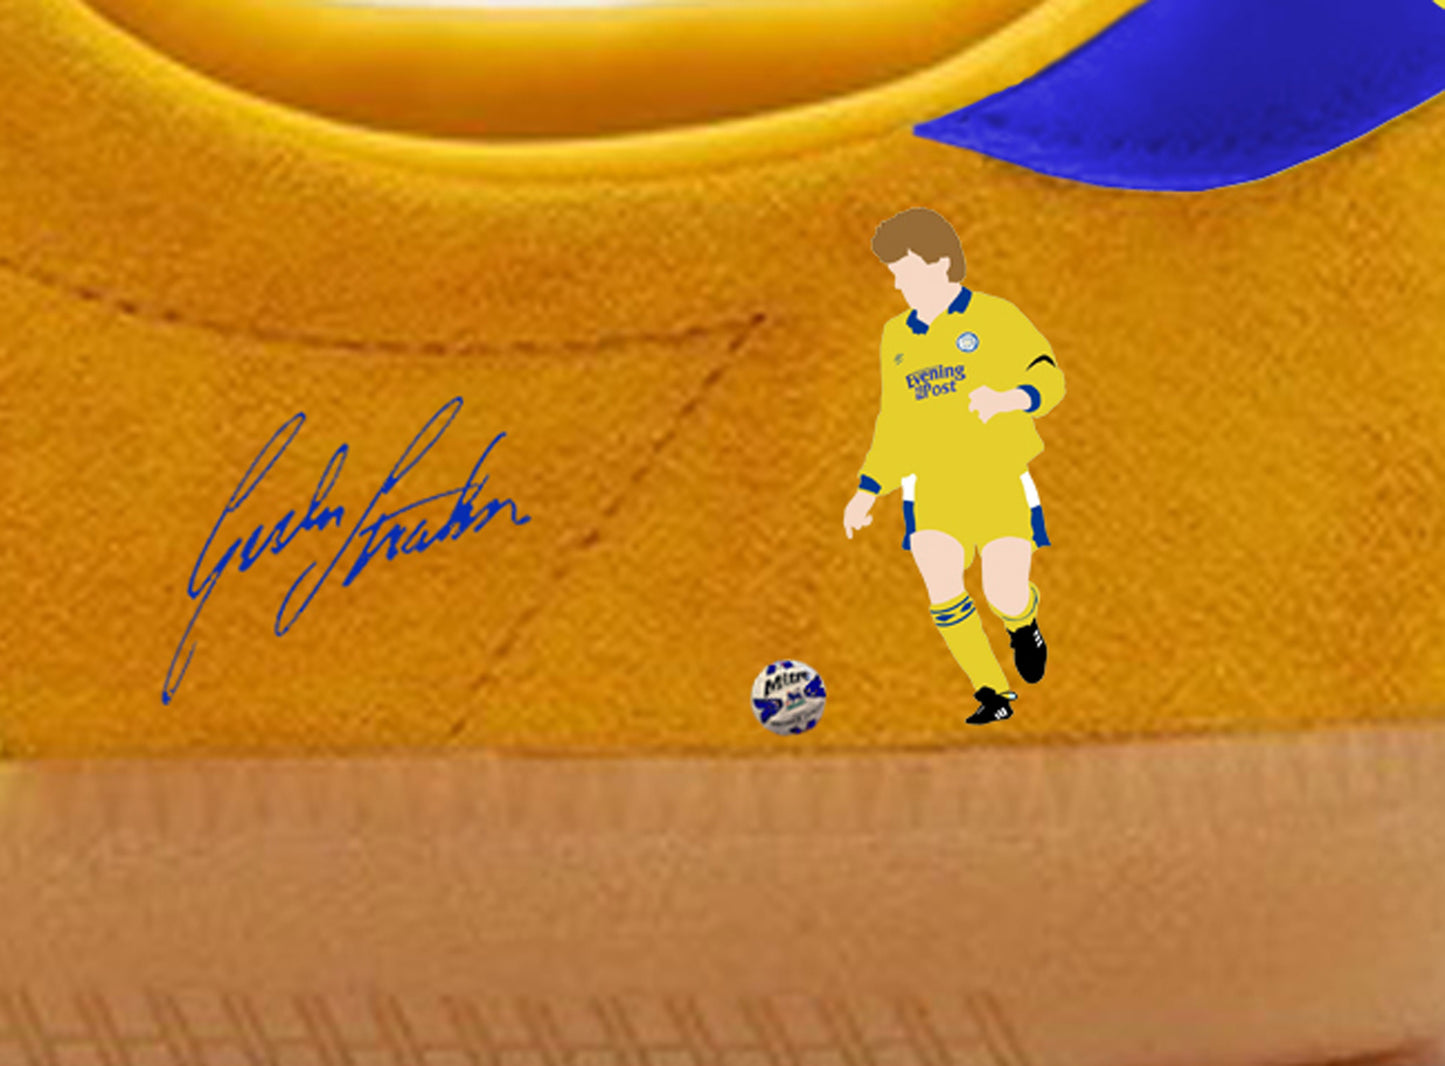 Limited edition Leeds Utd FC retro Gordon Strachan yellow / blue Adidas custom Sunshine trainers / sneakers